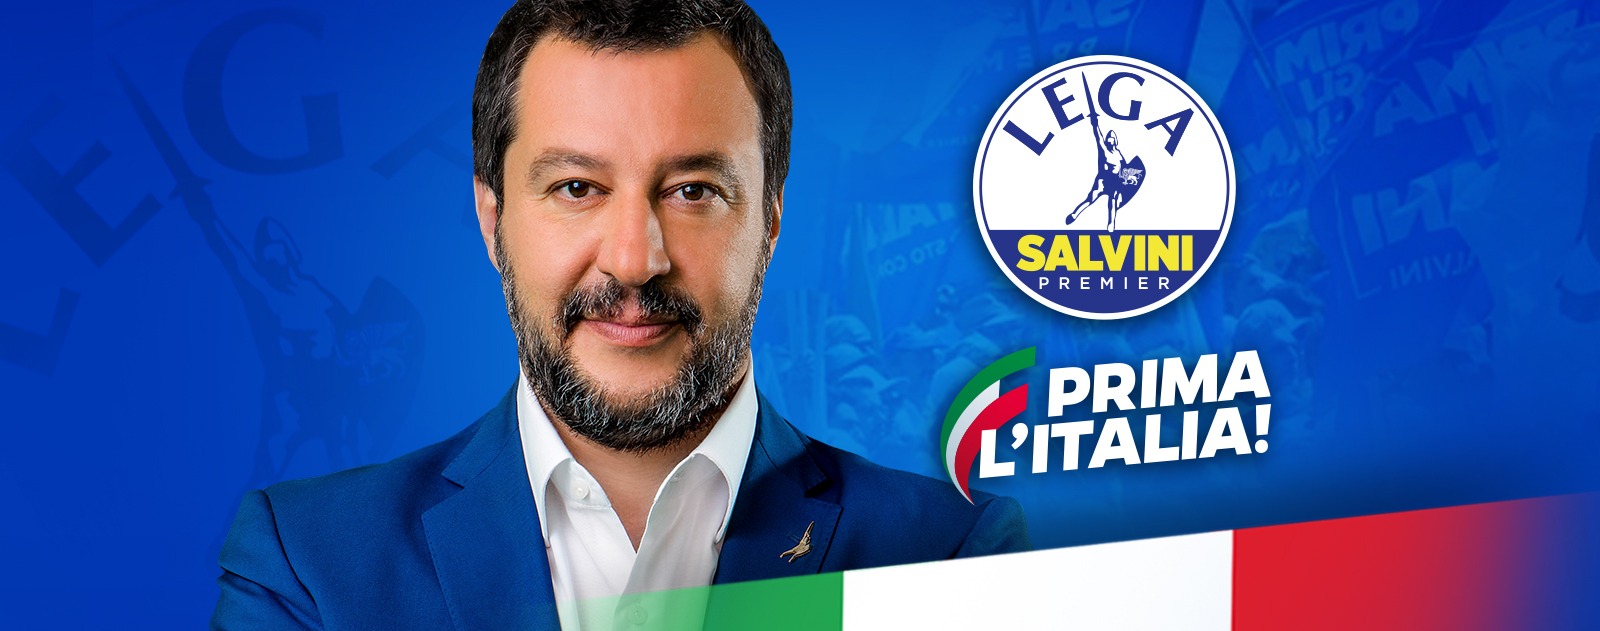 Lega Toscana per Salvini Premier